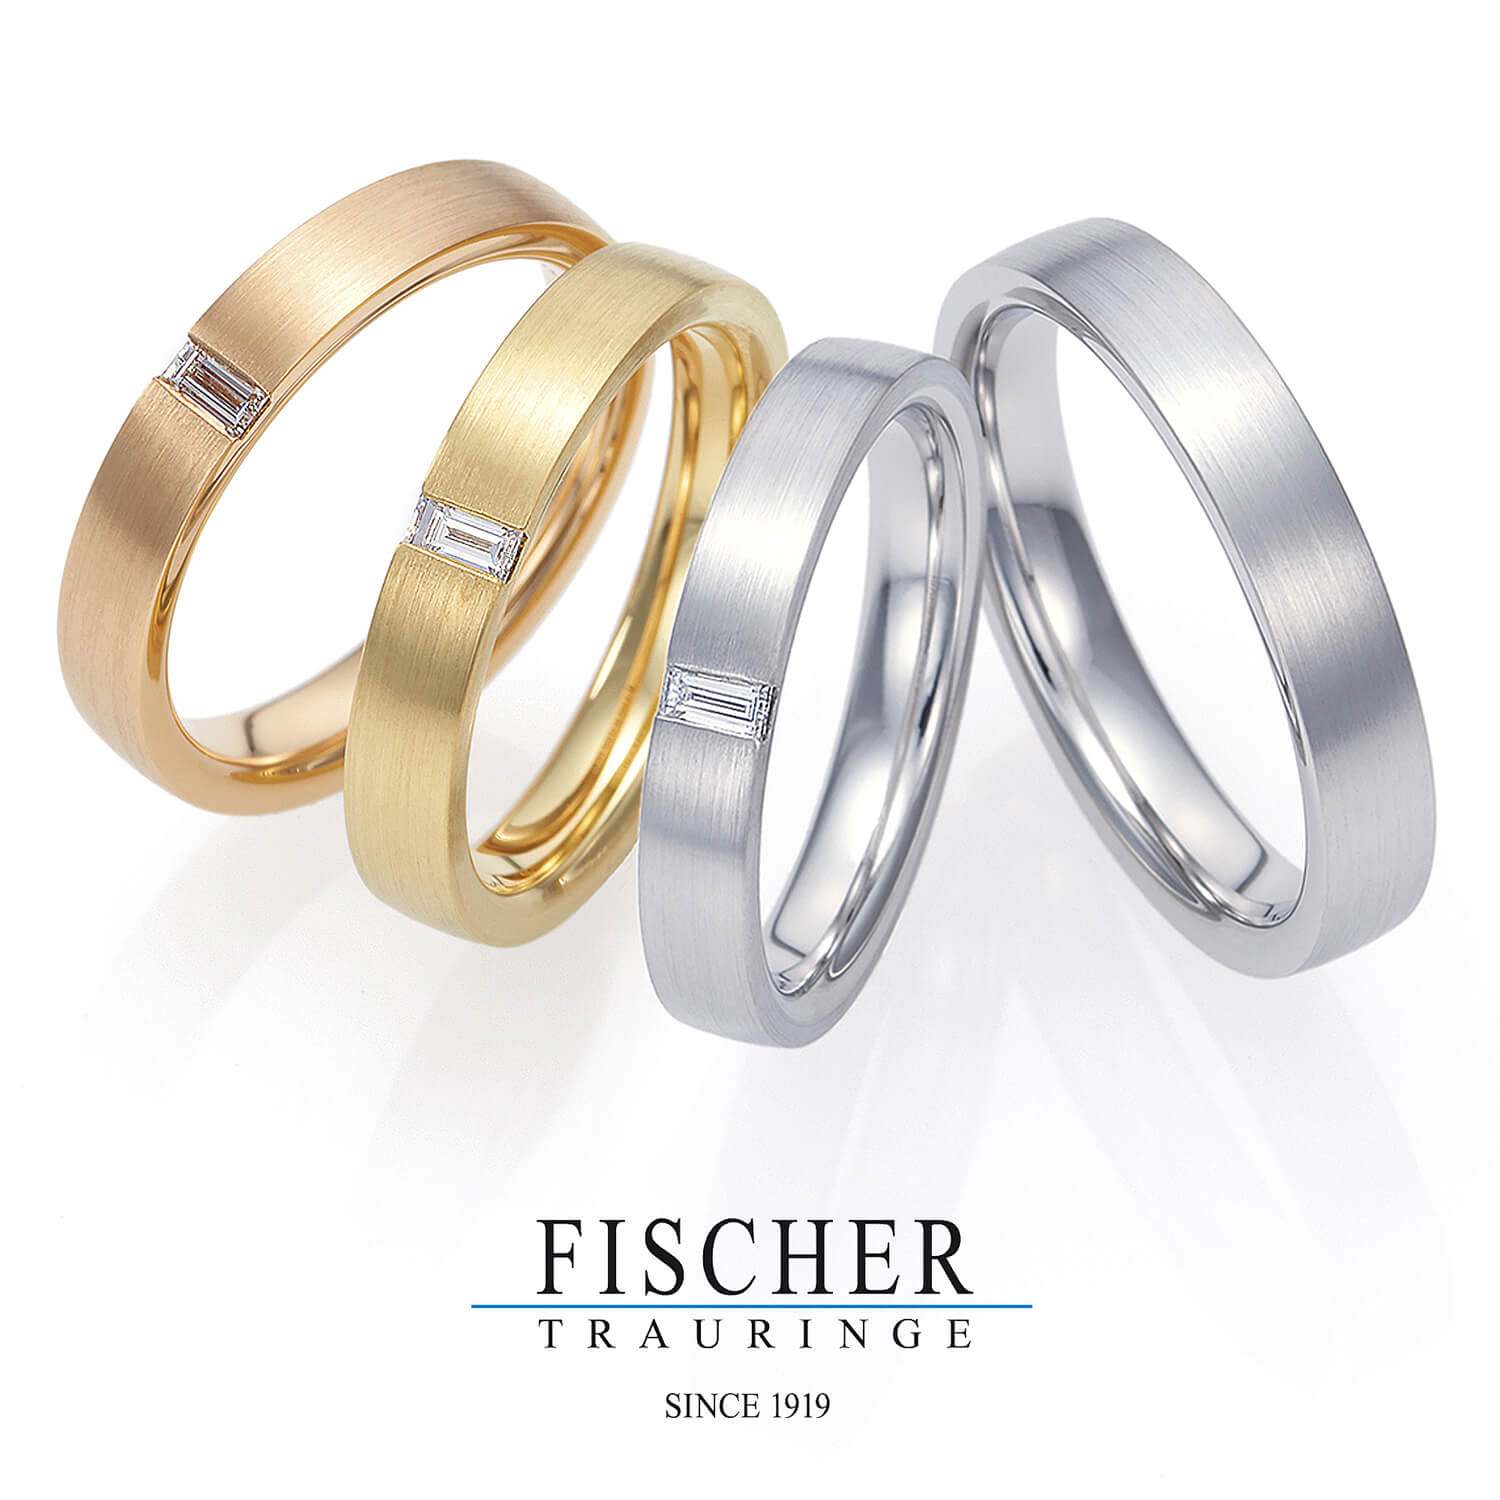 FISCHERフィッシャーの結婚指輪マリッジリングMarriageringの9750709-032と9650709-035